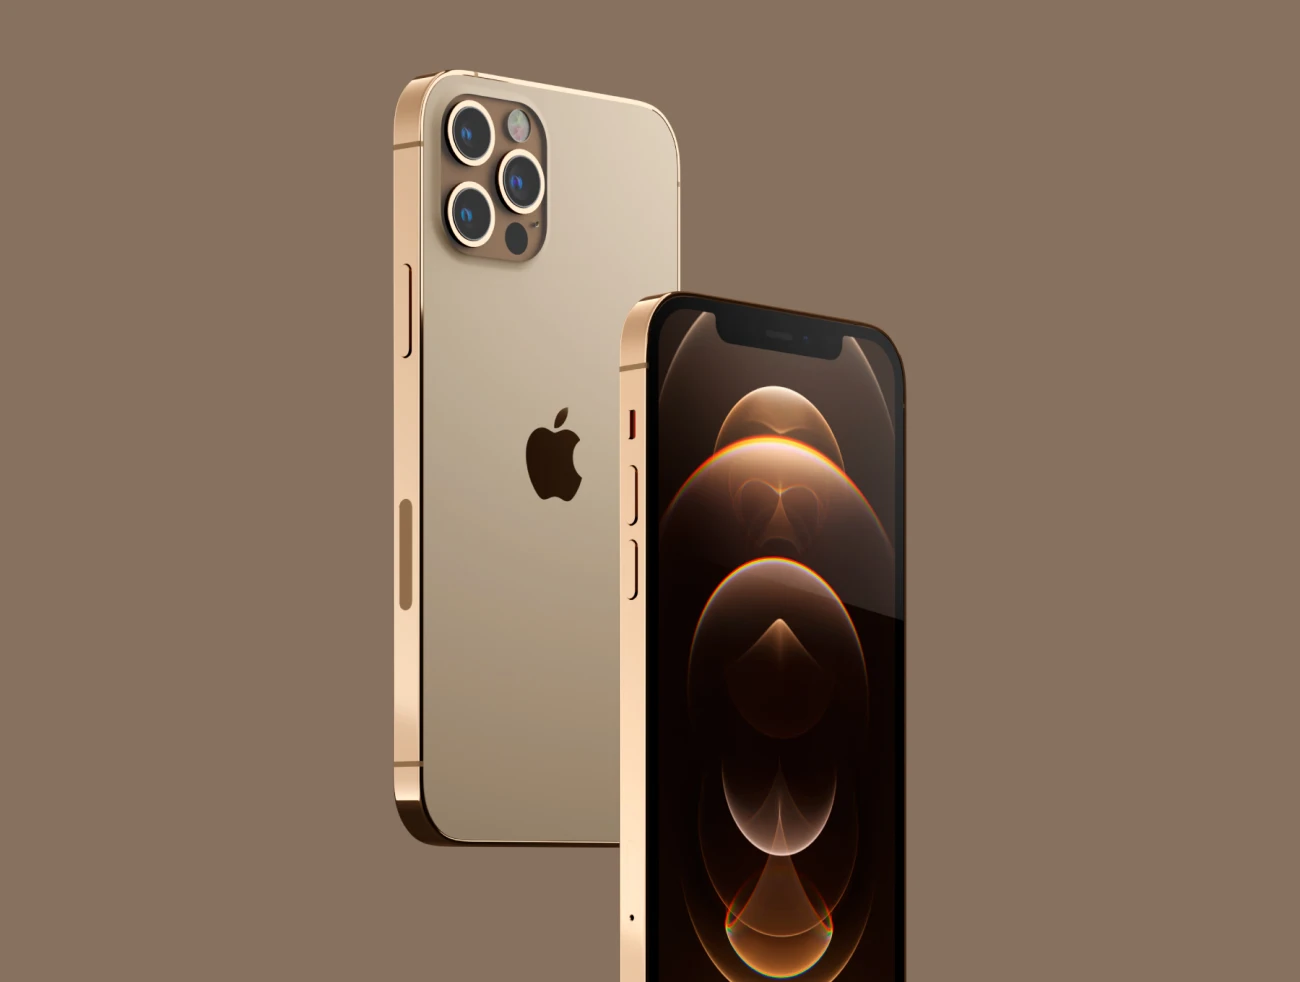 iPhone 12 PRO Gold 3D Model 激光扫描精度无细分金色iPhone 12 pro三维样机模型源文件-产品展示、创意展示、手机模型、样机、简约样机、苹果设备-到位啦UI